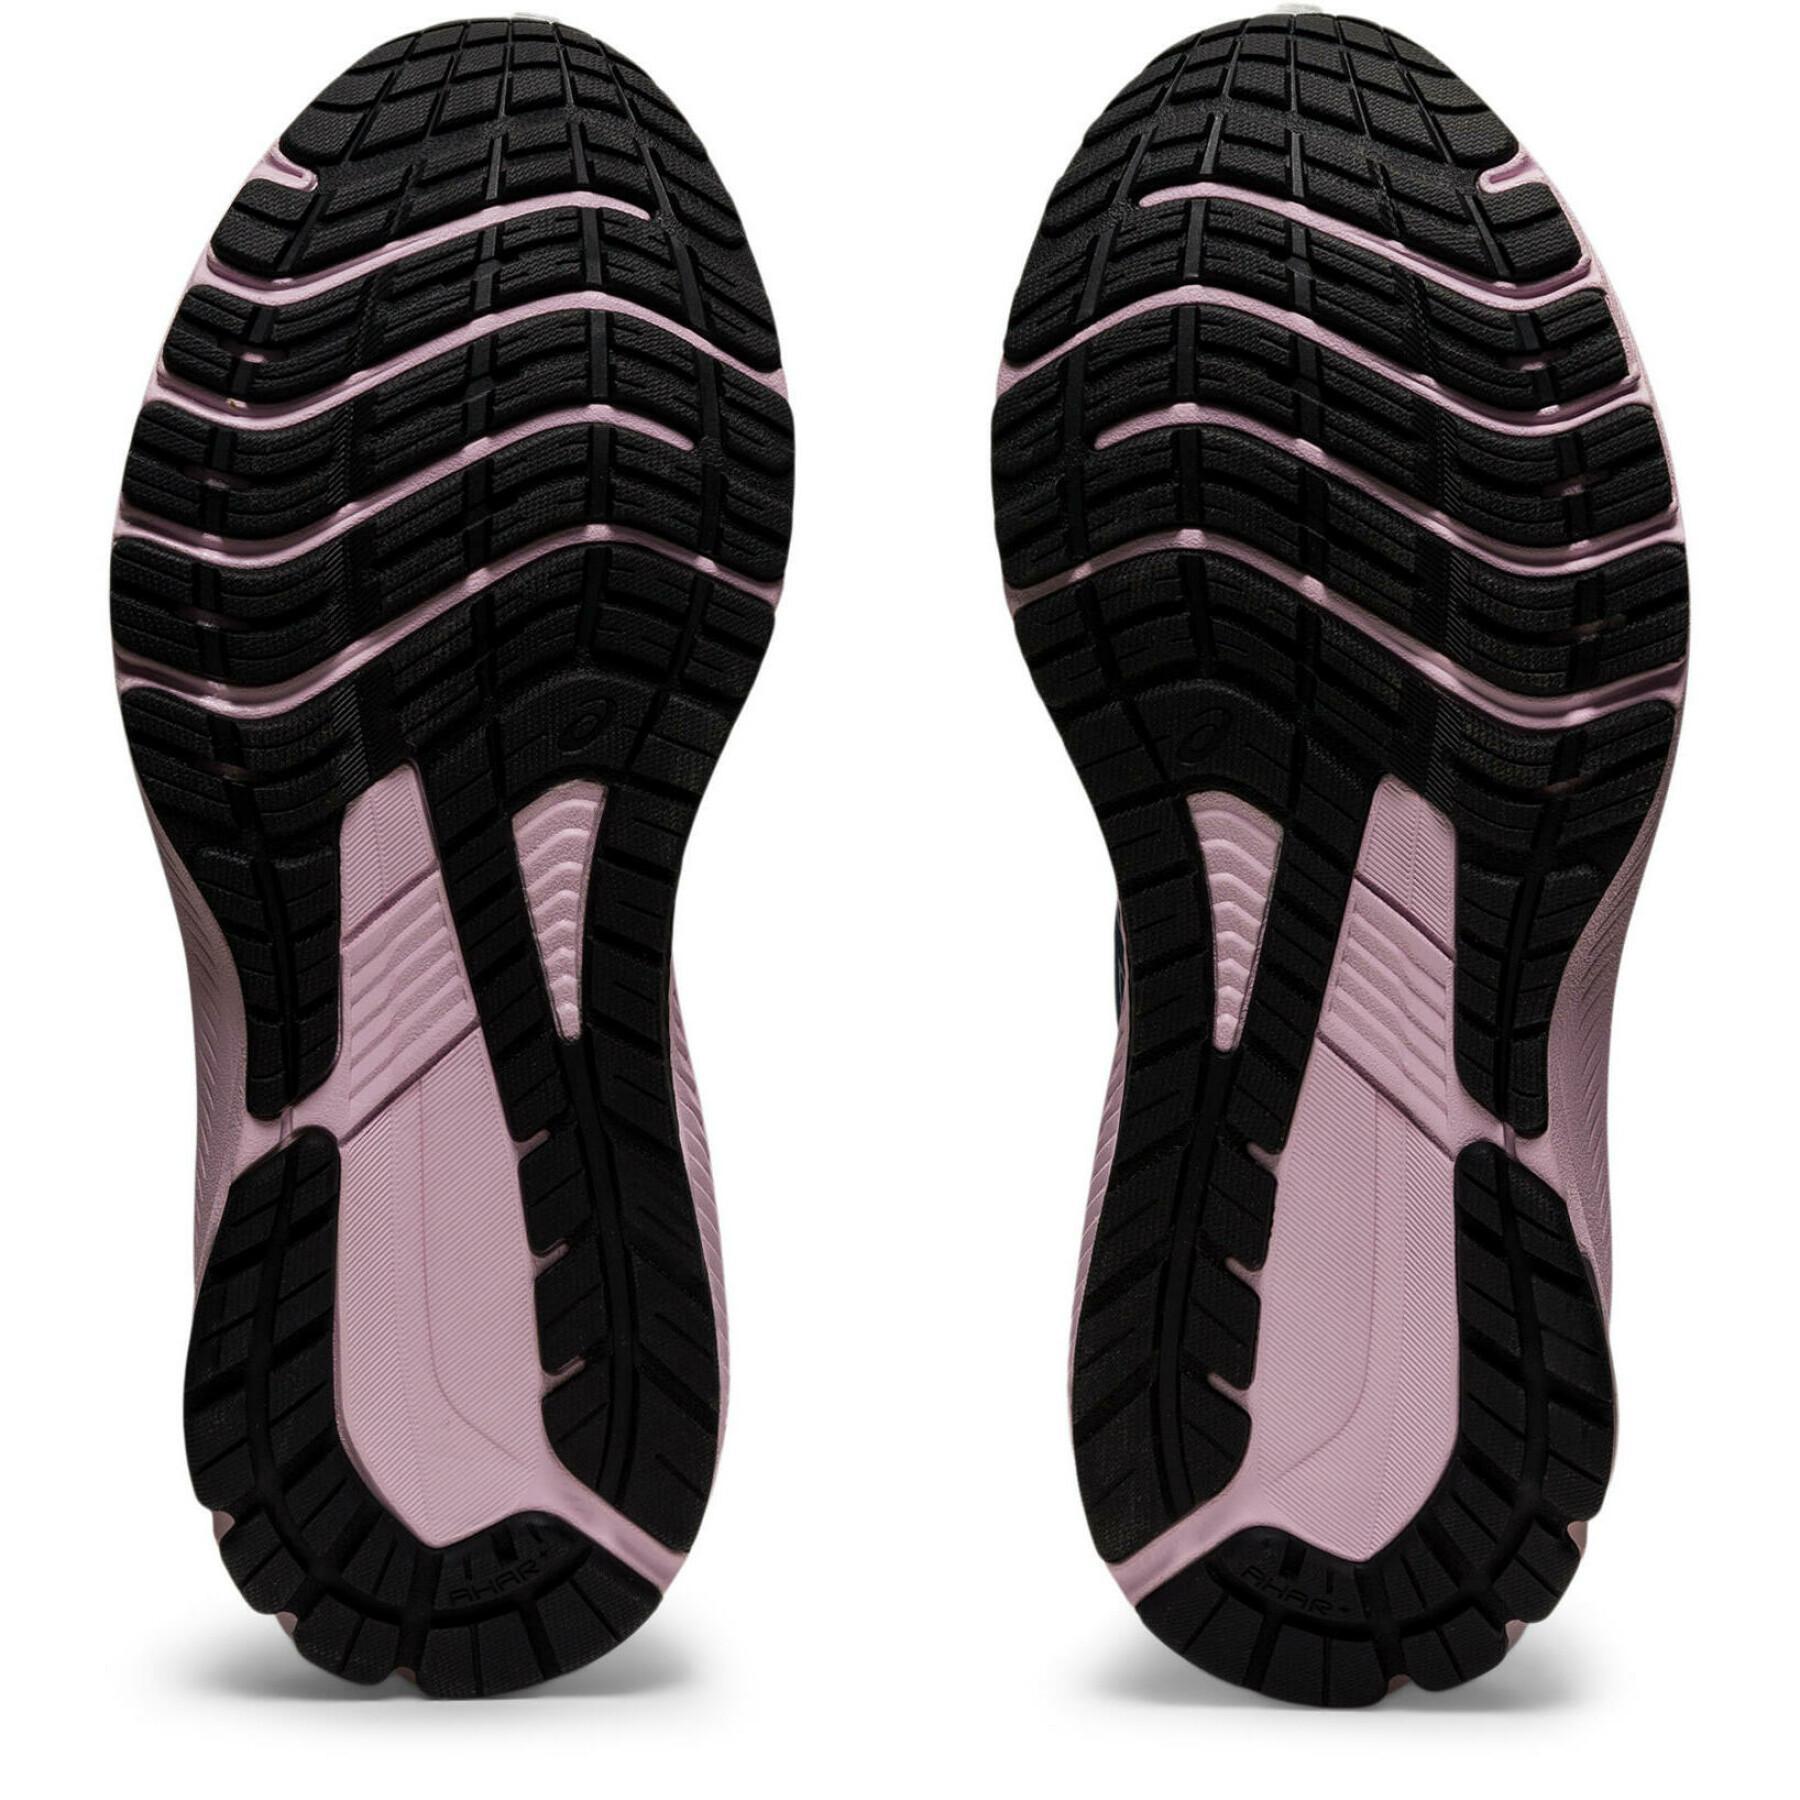 Women's shoes Asics Gt-1000 11